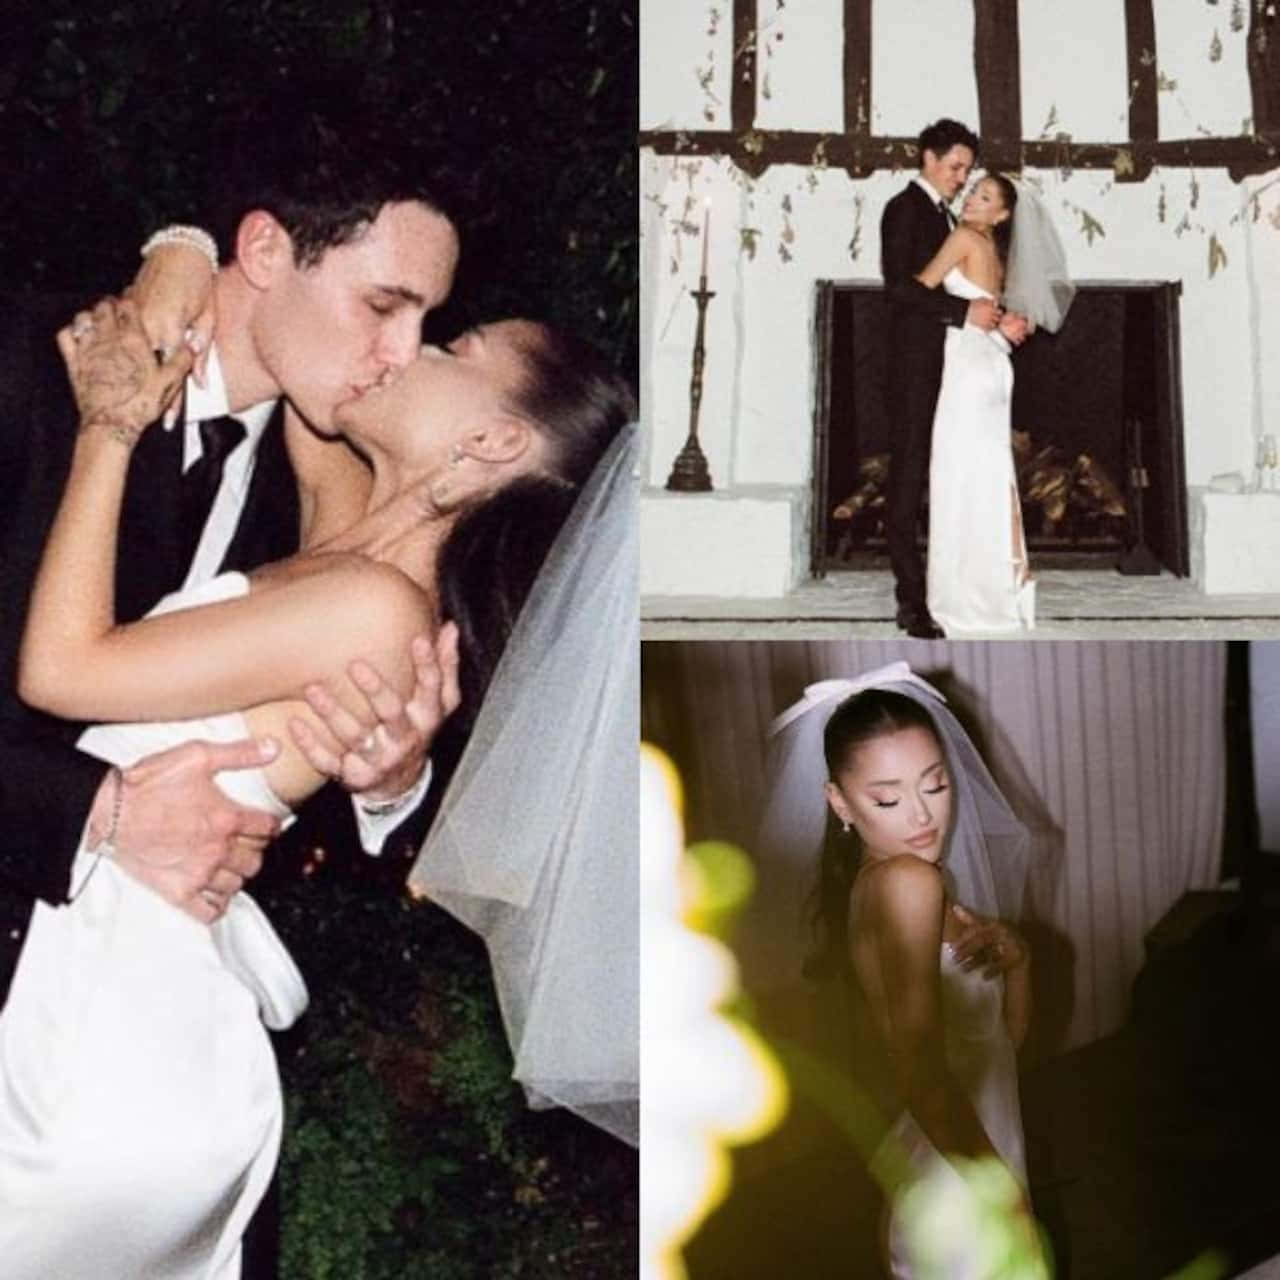 Caption: Ariana Grande Glowing on Her Wedding Day